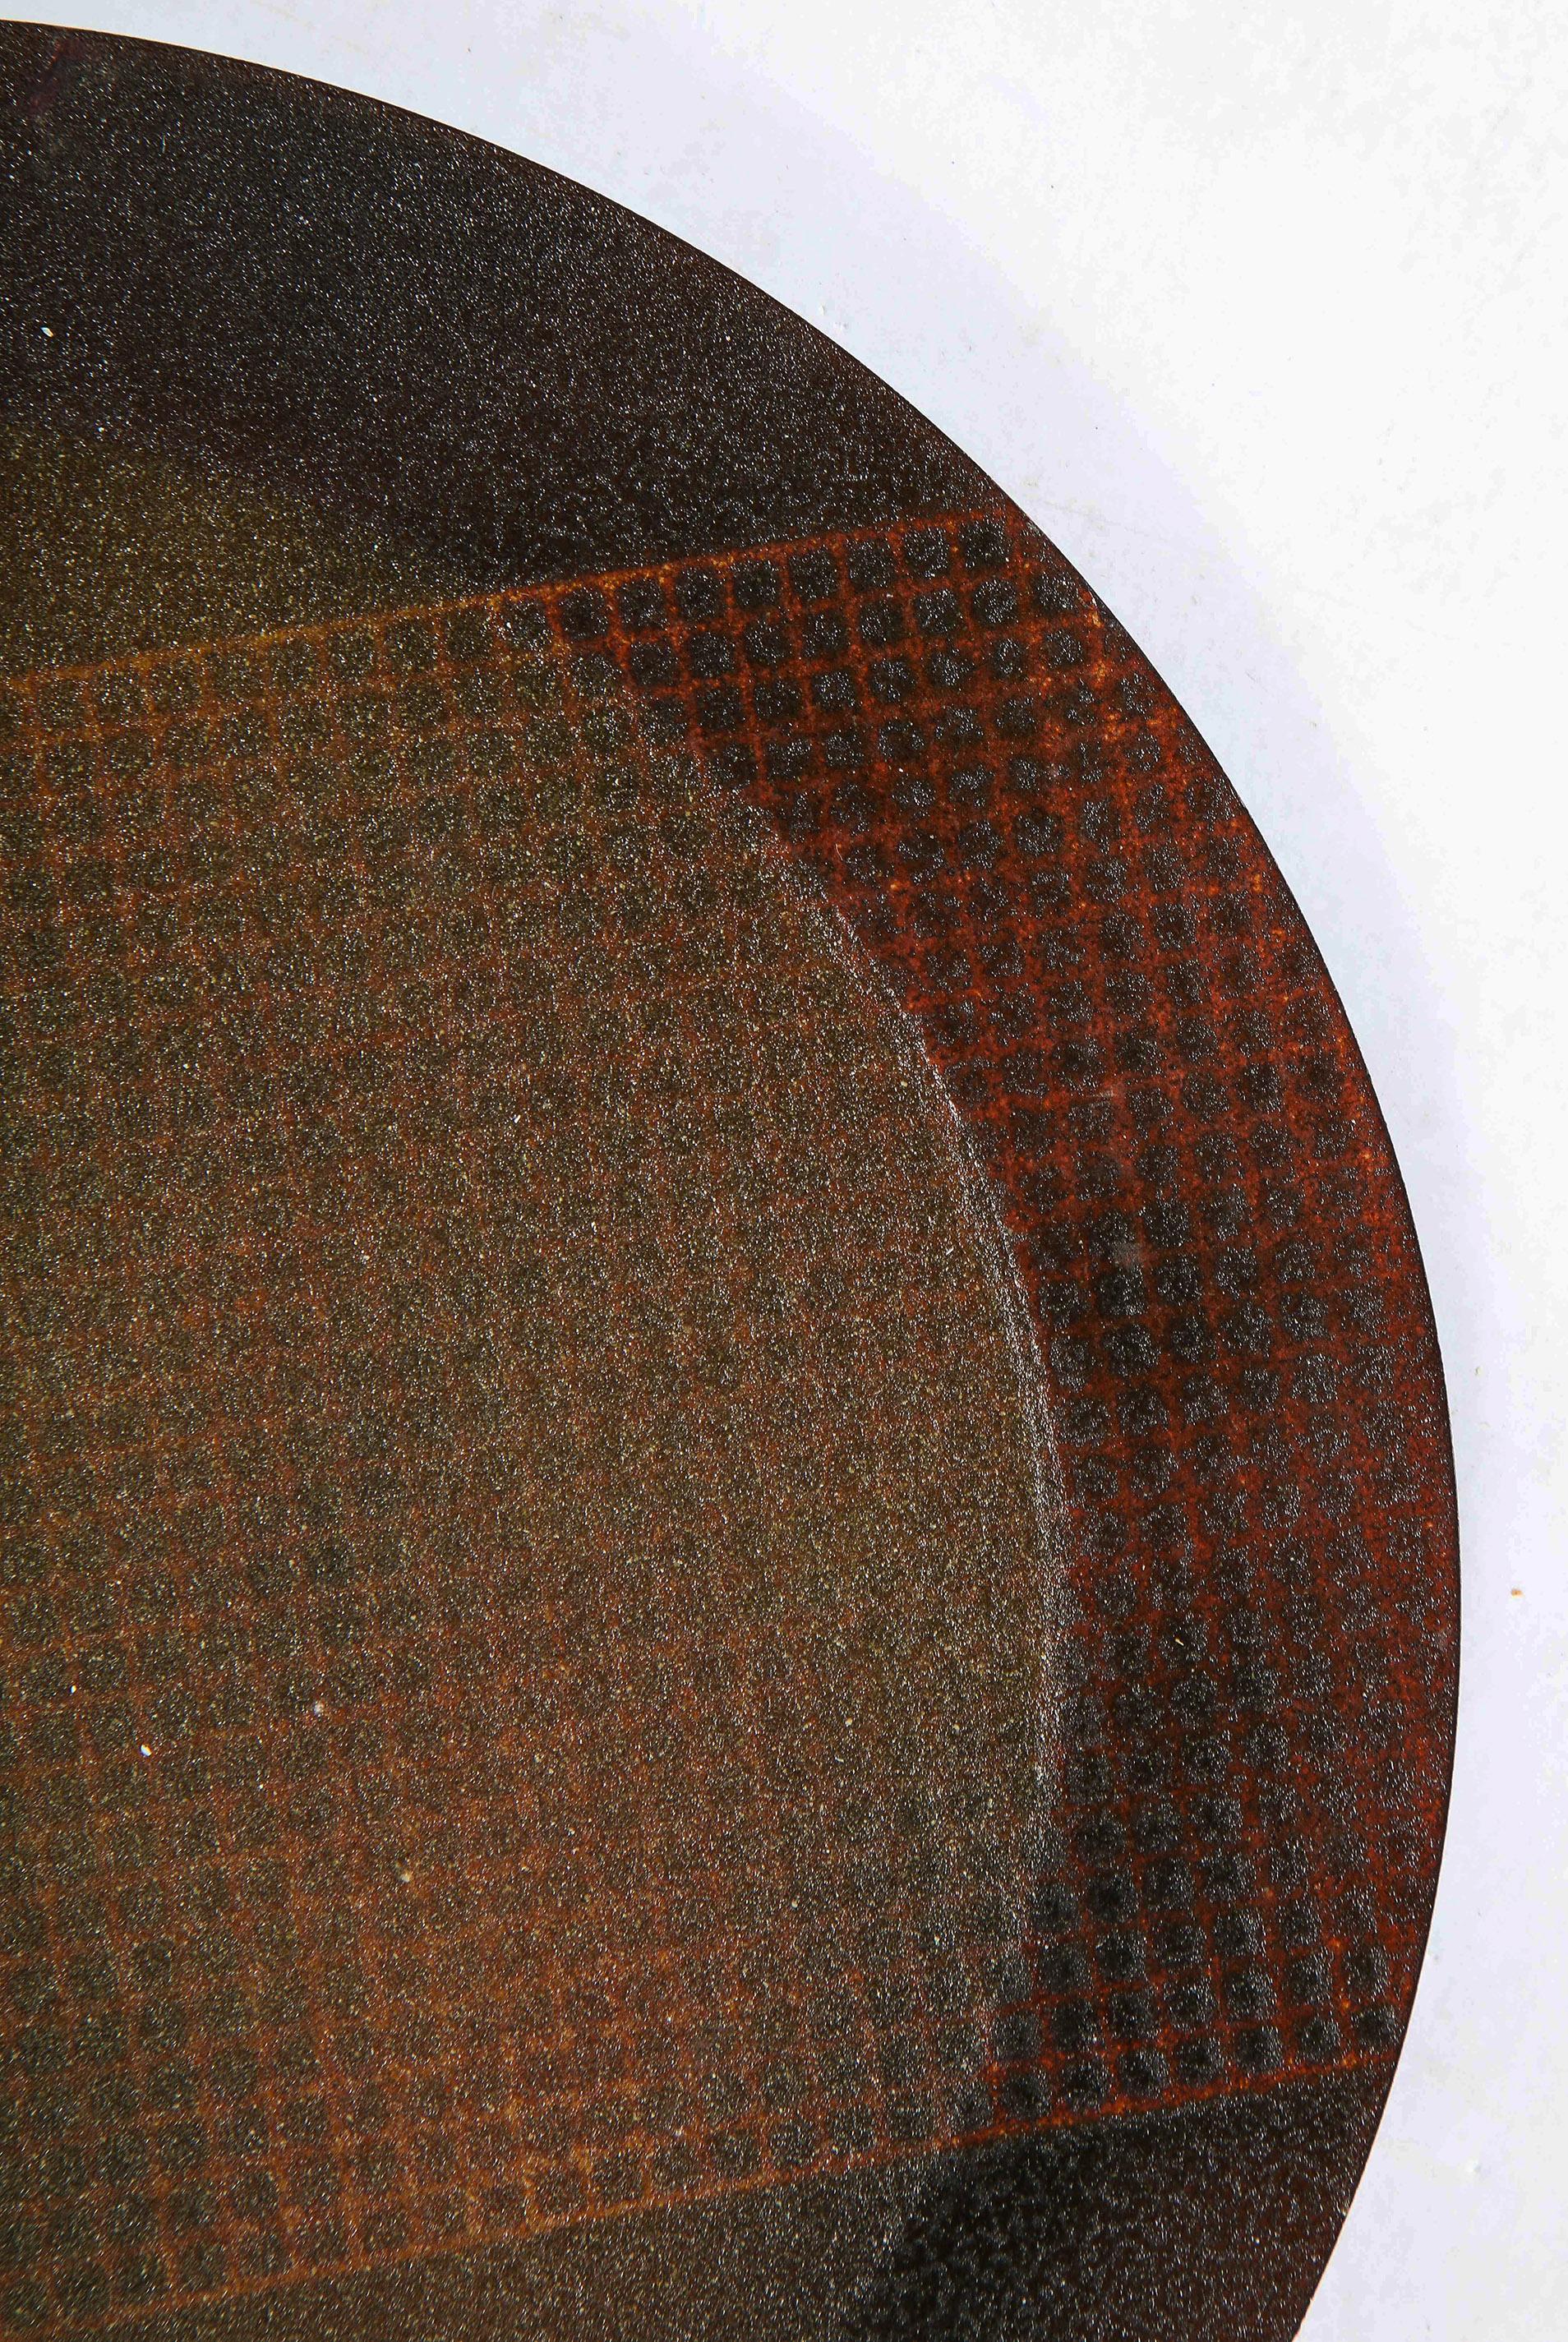 Enamel on copper plate form
Signed en verso